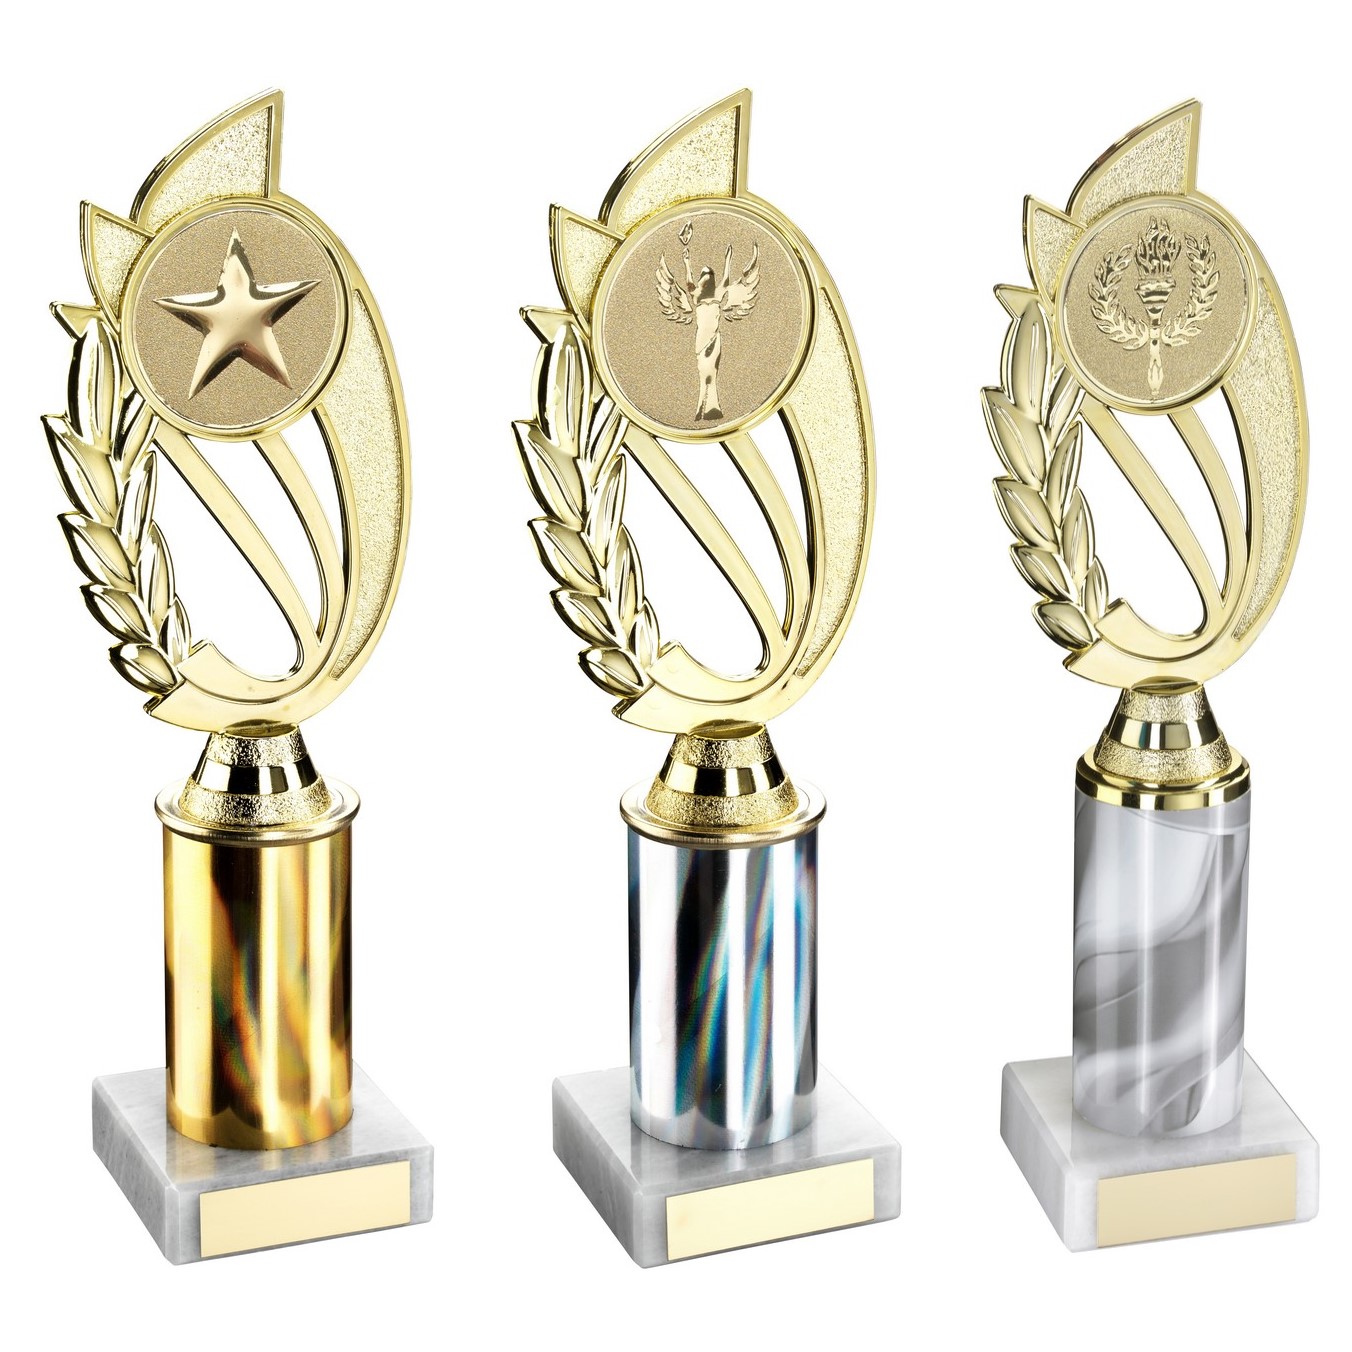 Halcyon Trophy Gold, Silver or Marble - Bev - JR34-TY160/ JR34-TY161/ JR34-TY173